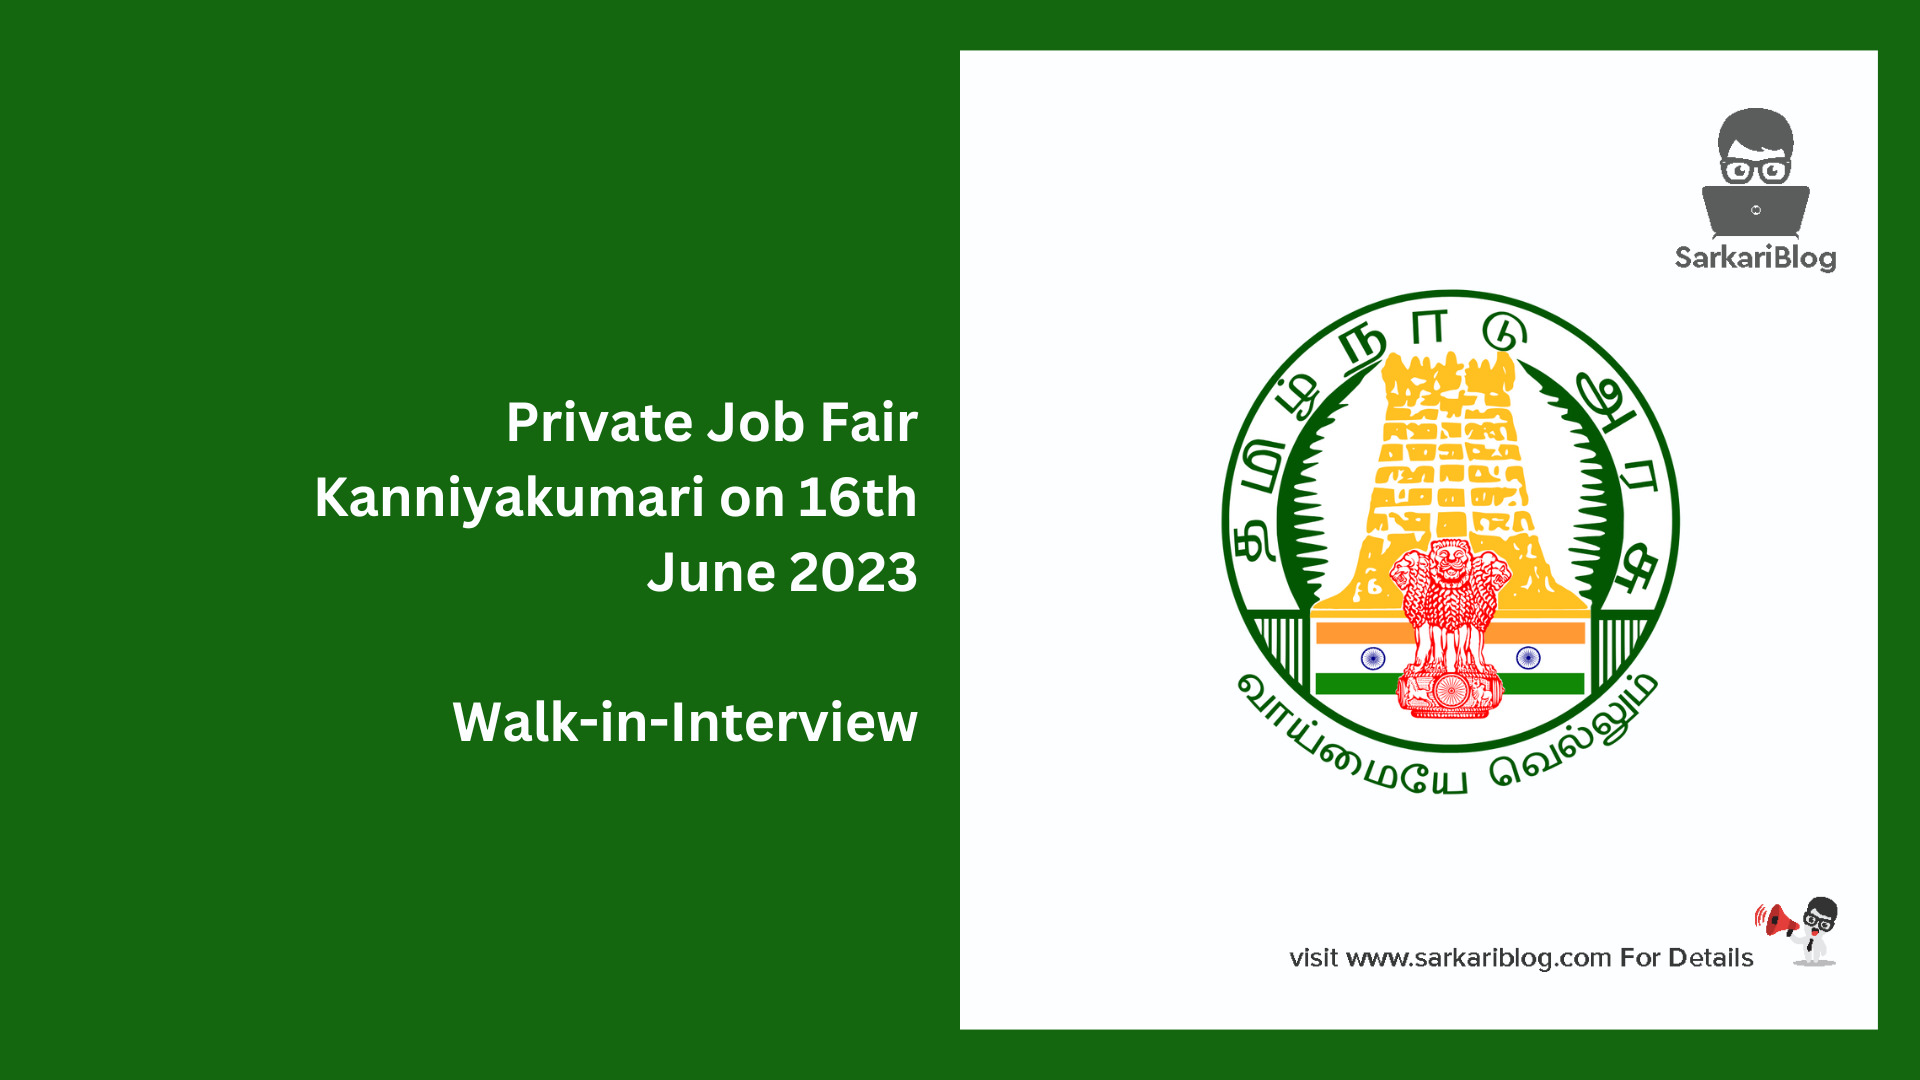 Private Job Fair Kanniyakumari on 16th June 2023